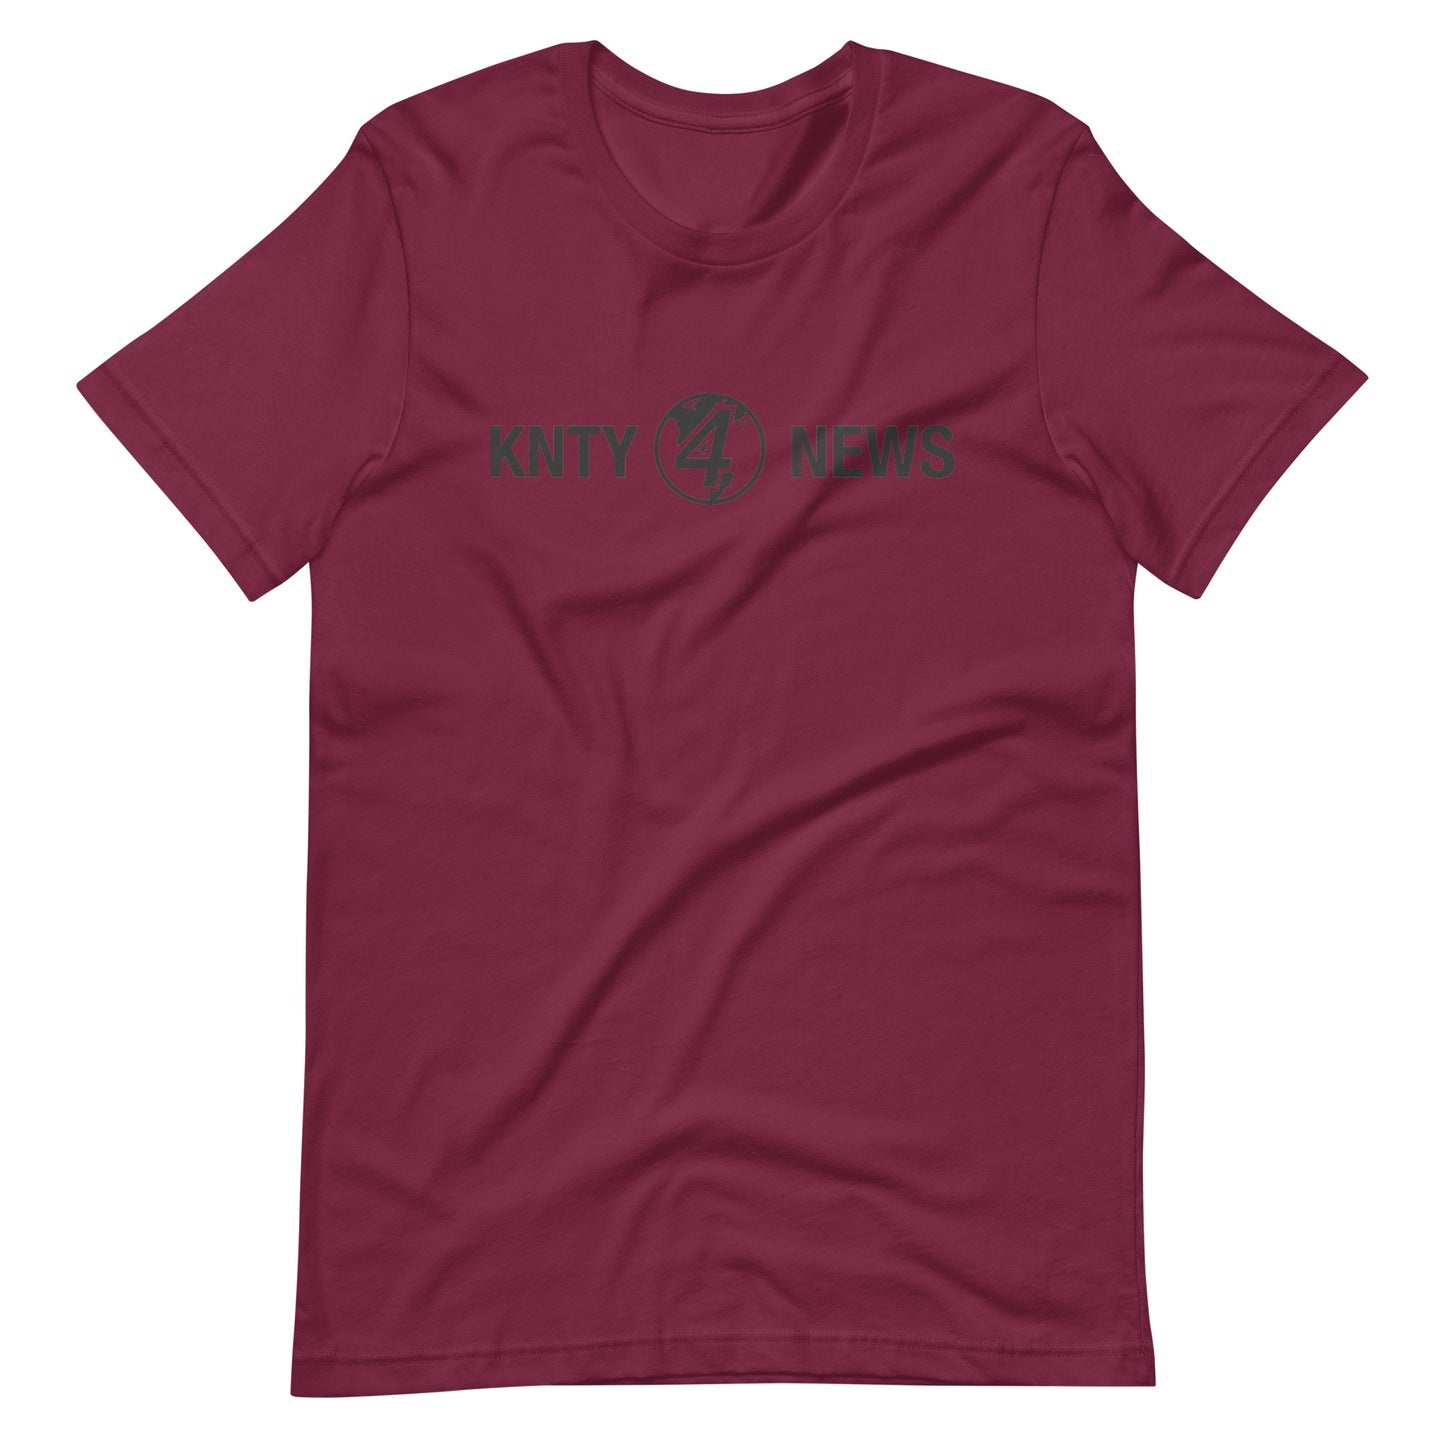 KNTY News Unisex t-shirt